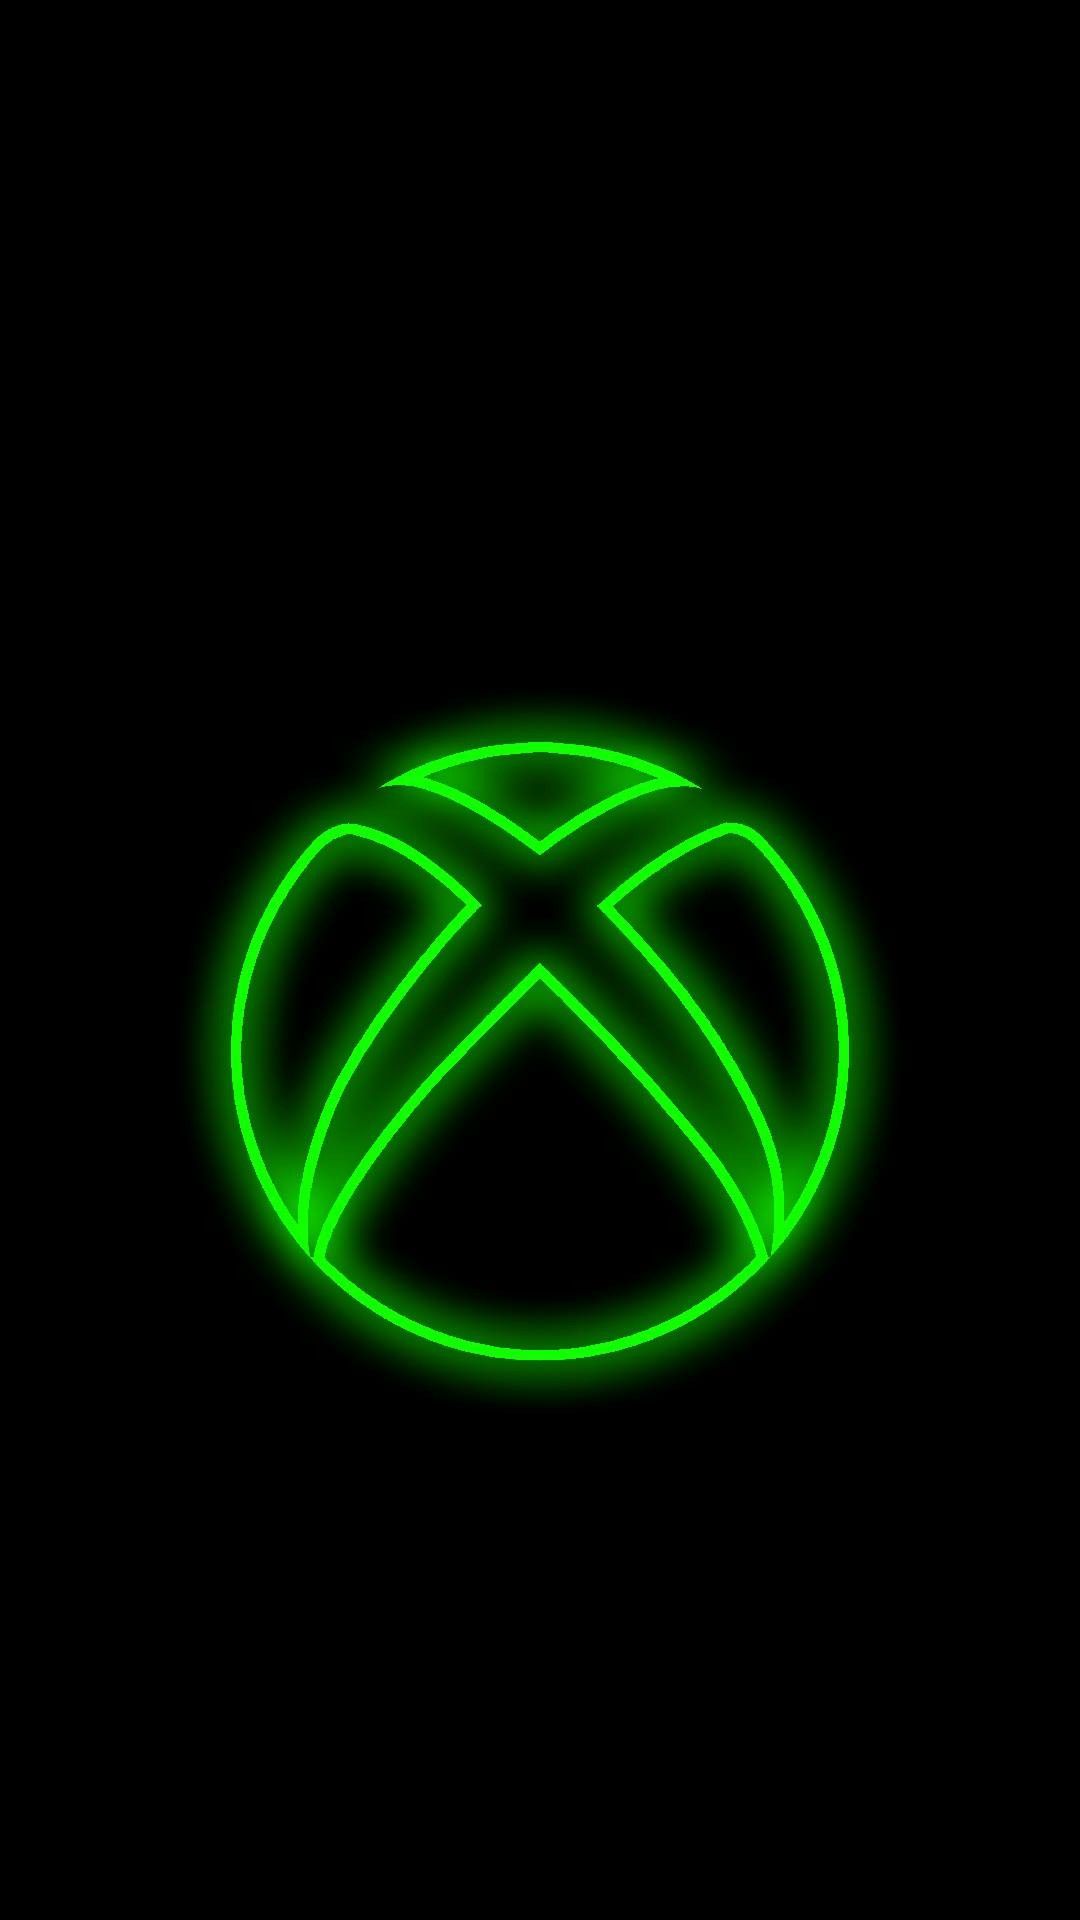 video games. Xbox logo, Xbox, Game wallpaper iphone